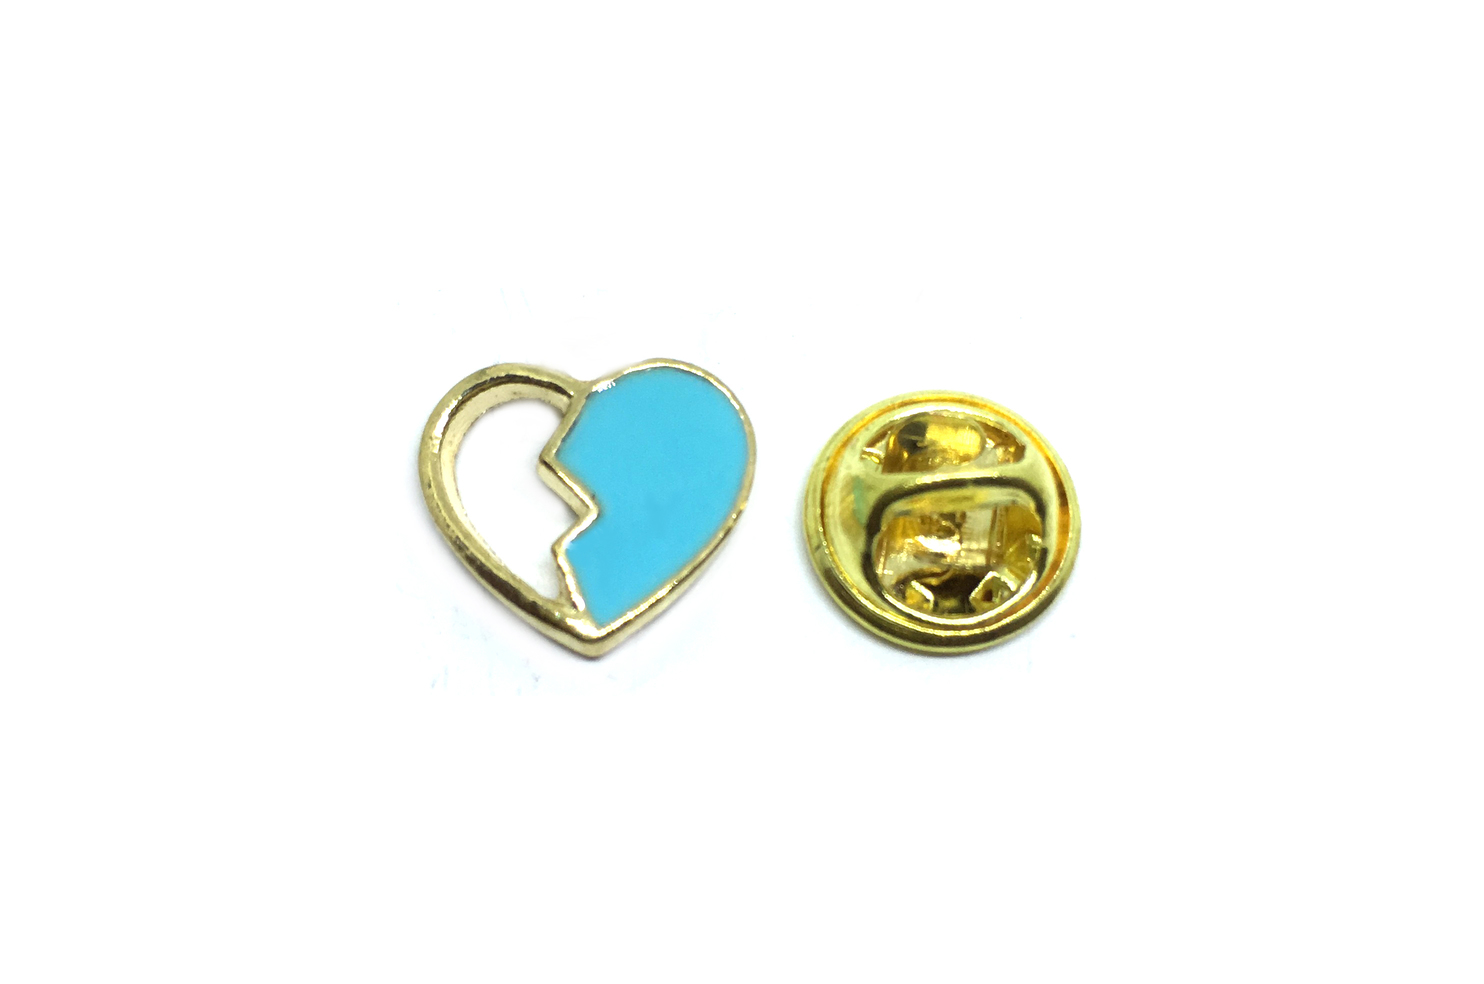 Blue Heart Pin Badge